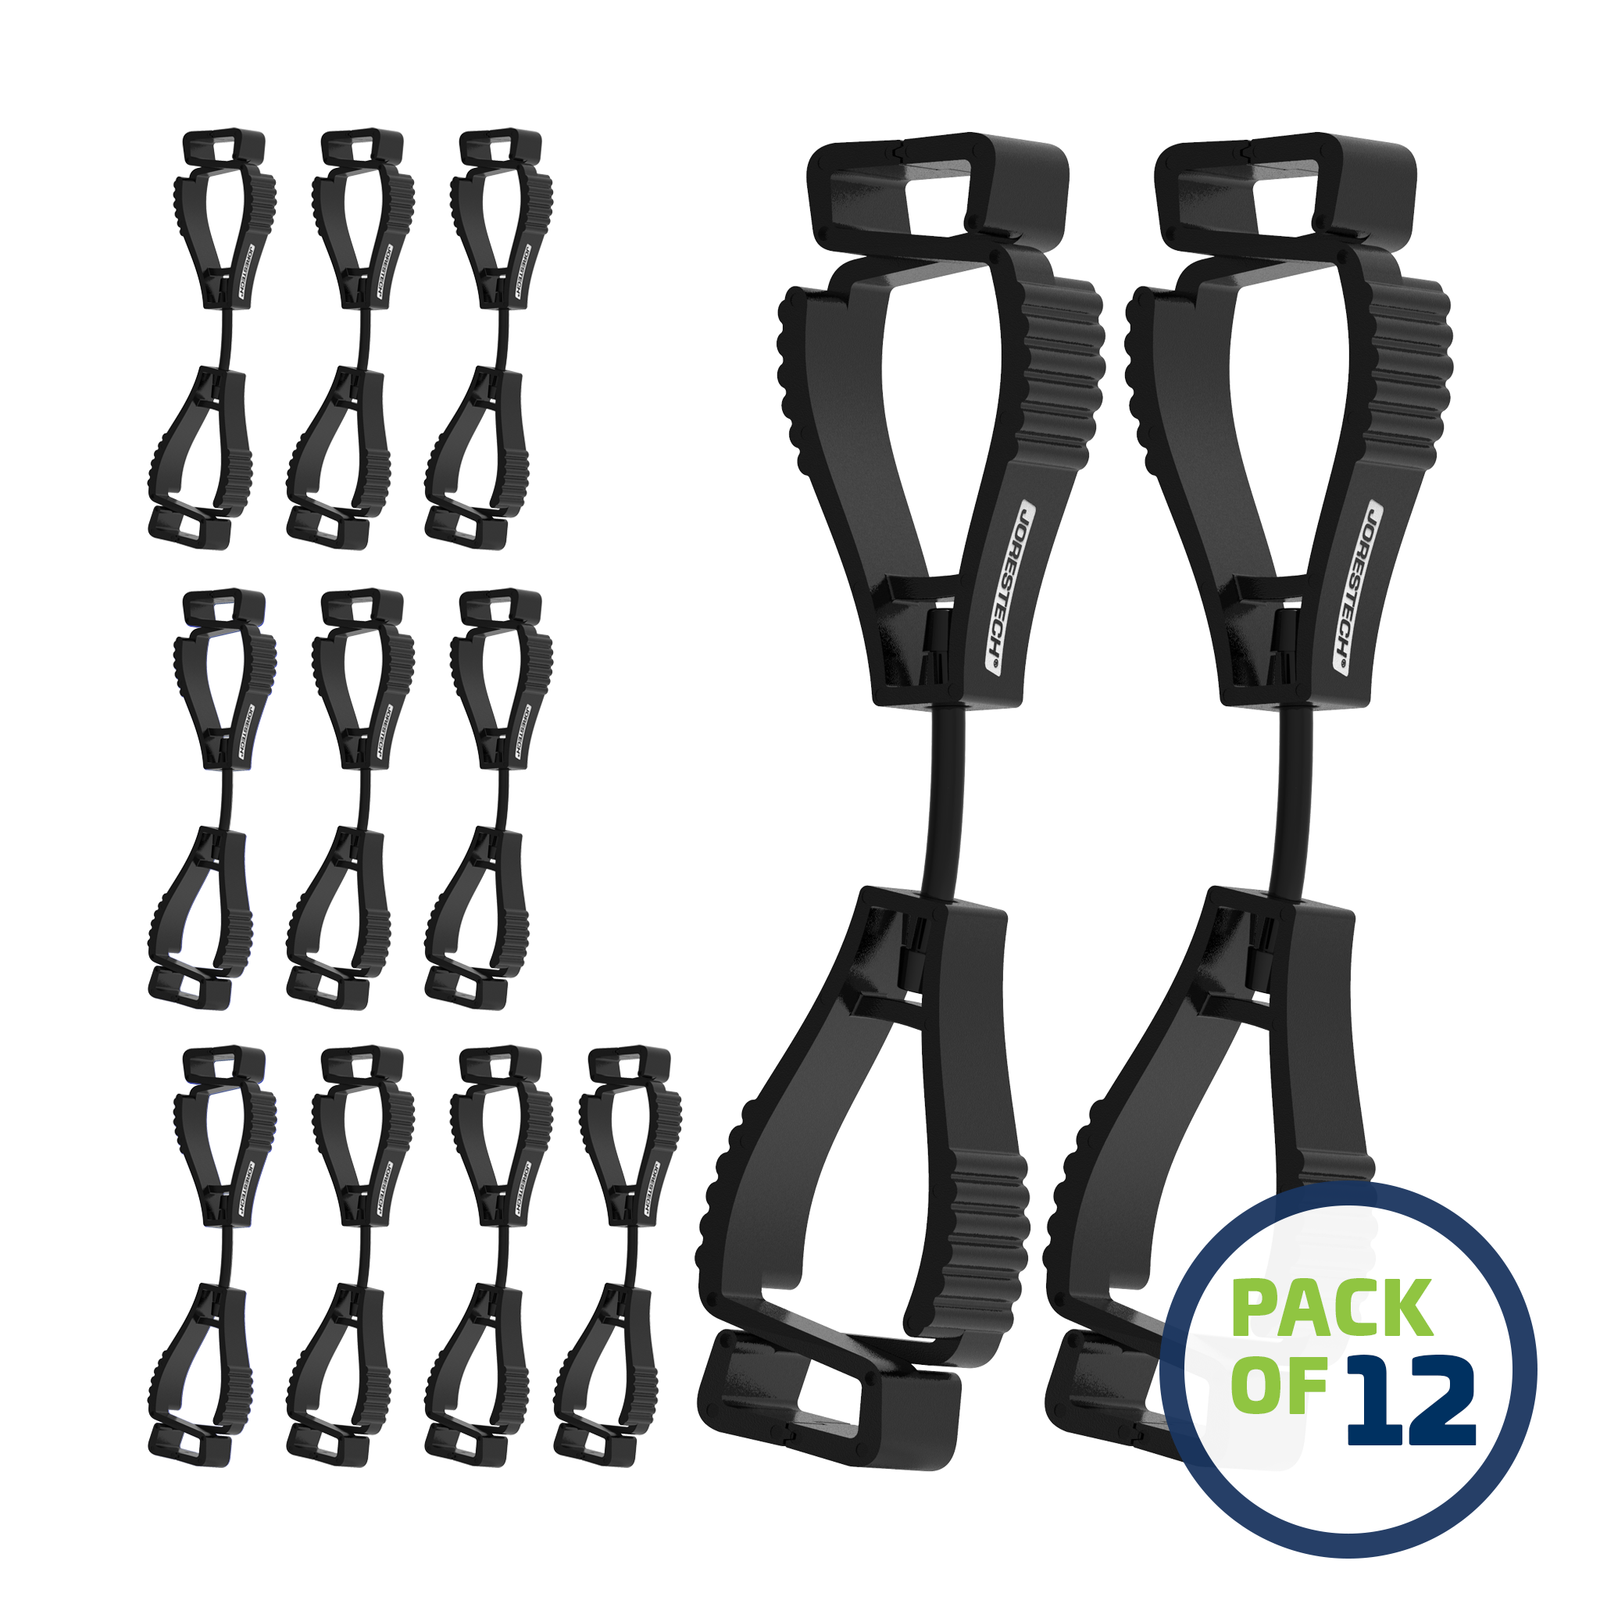 Pack of 12 Black JORESTECH clip safety holders